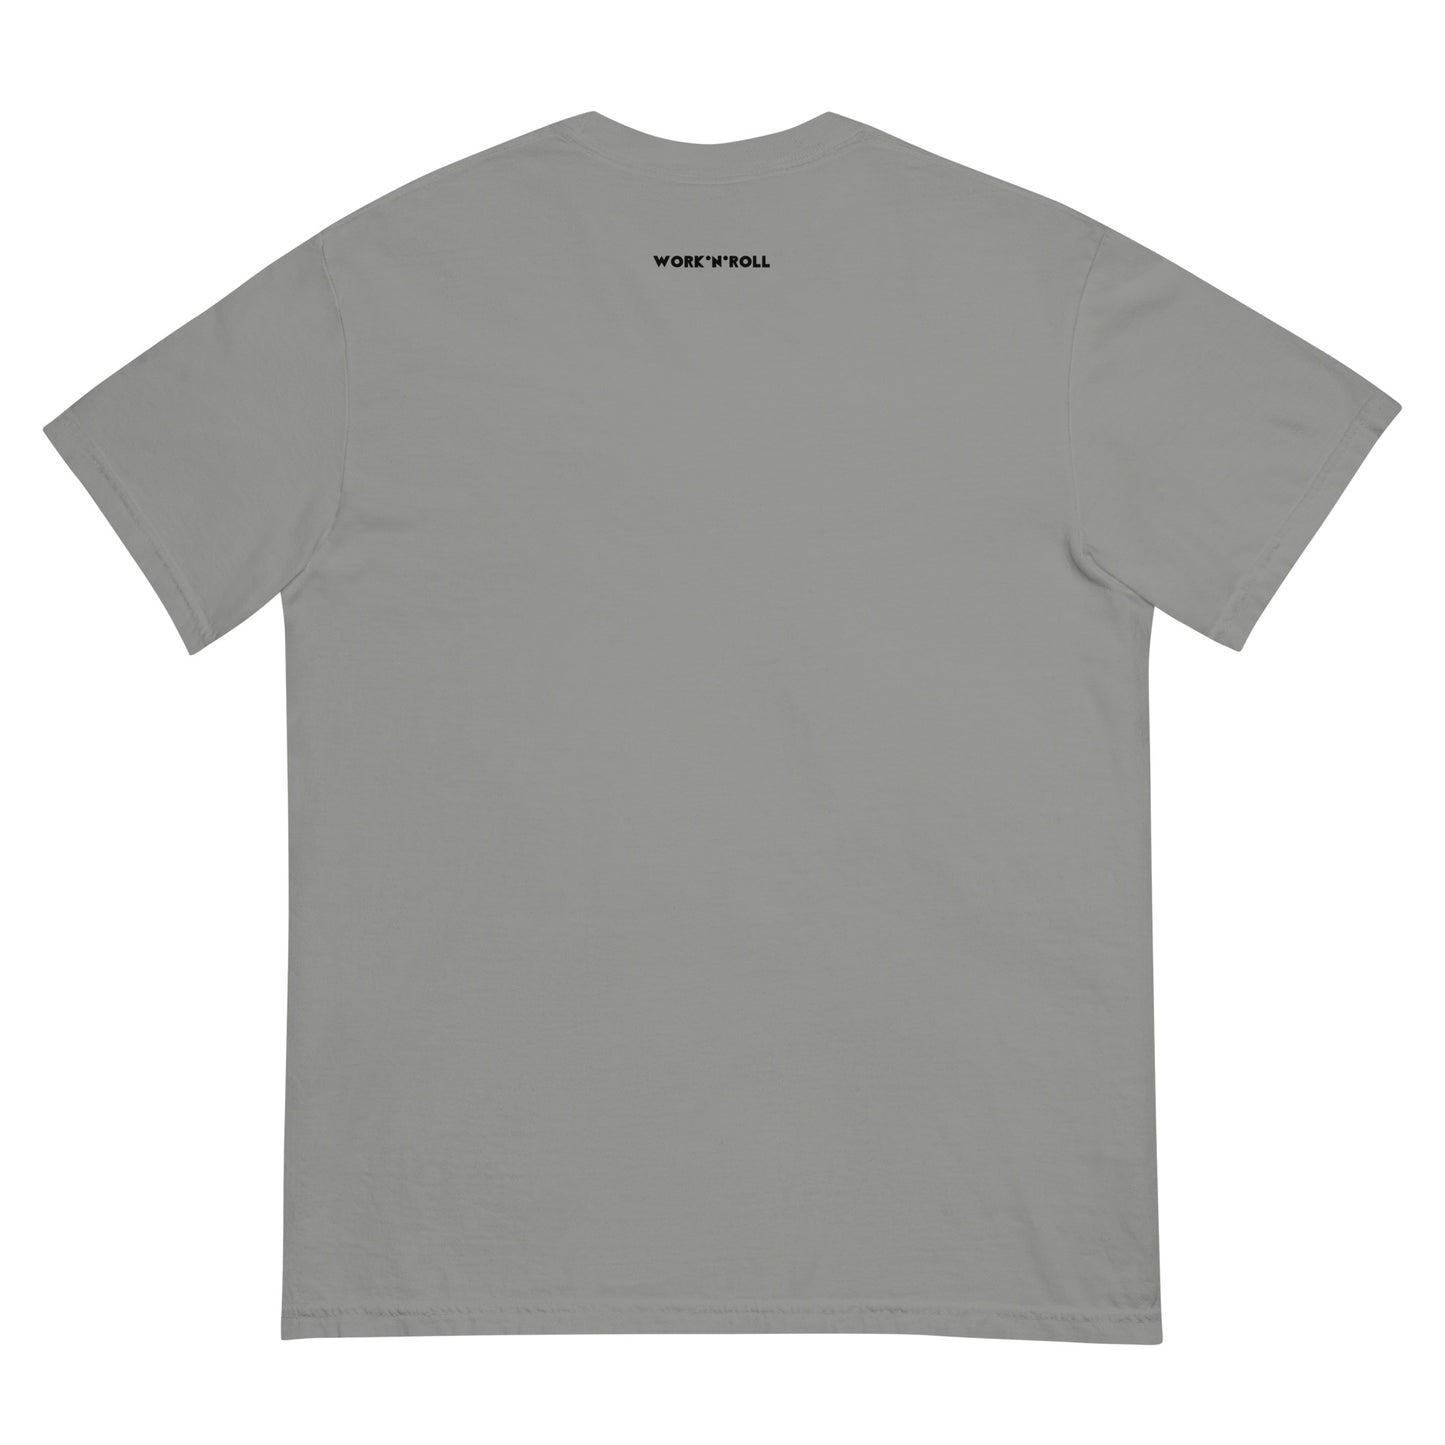 Heavyweight t-shirt "https://worknroll.nyc"